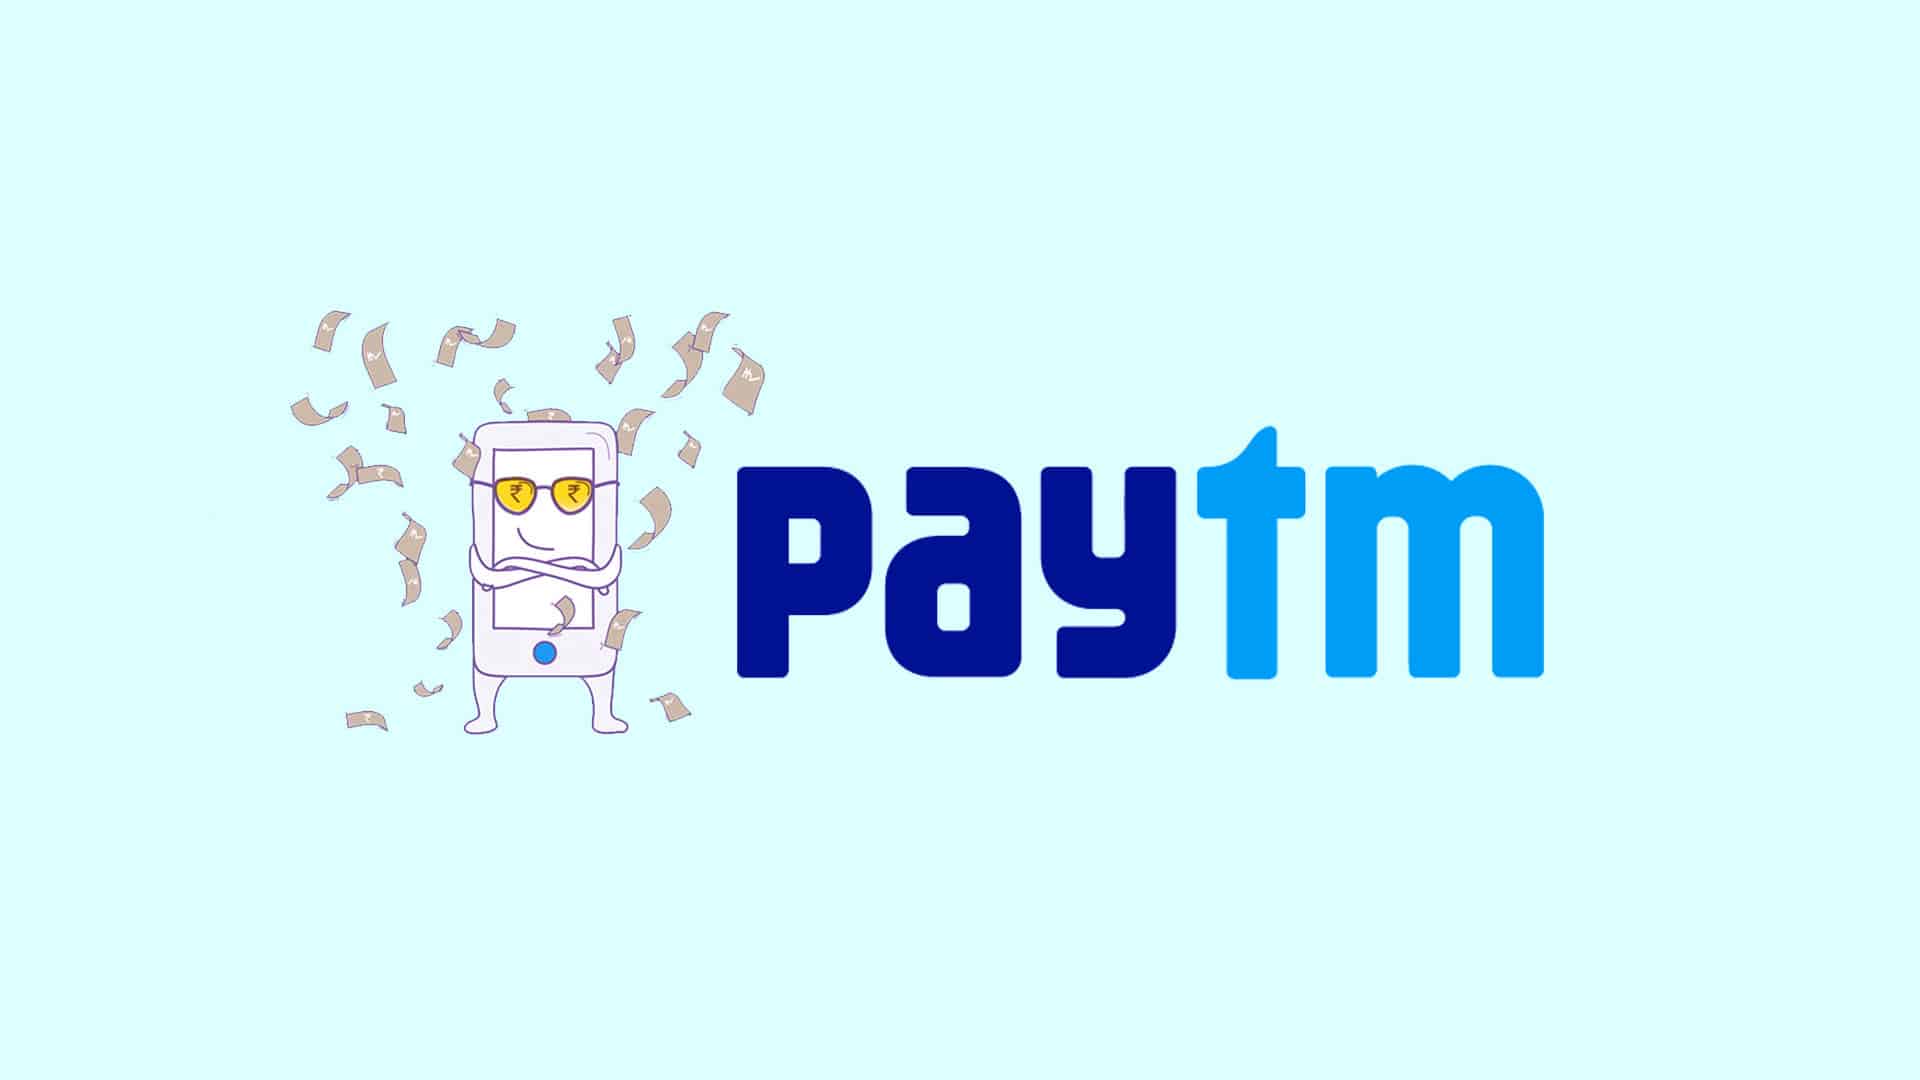 Paytm earmarks Rs 100 cr for marketing campaigns during festive season